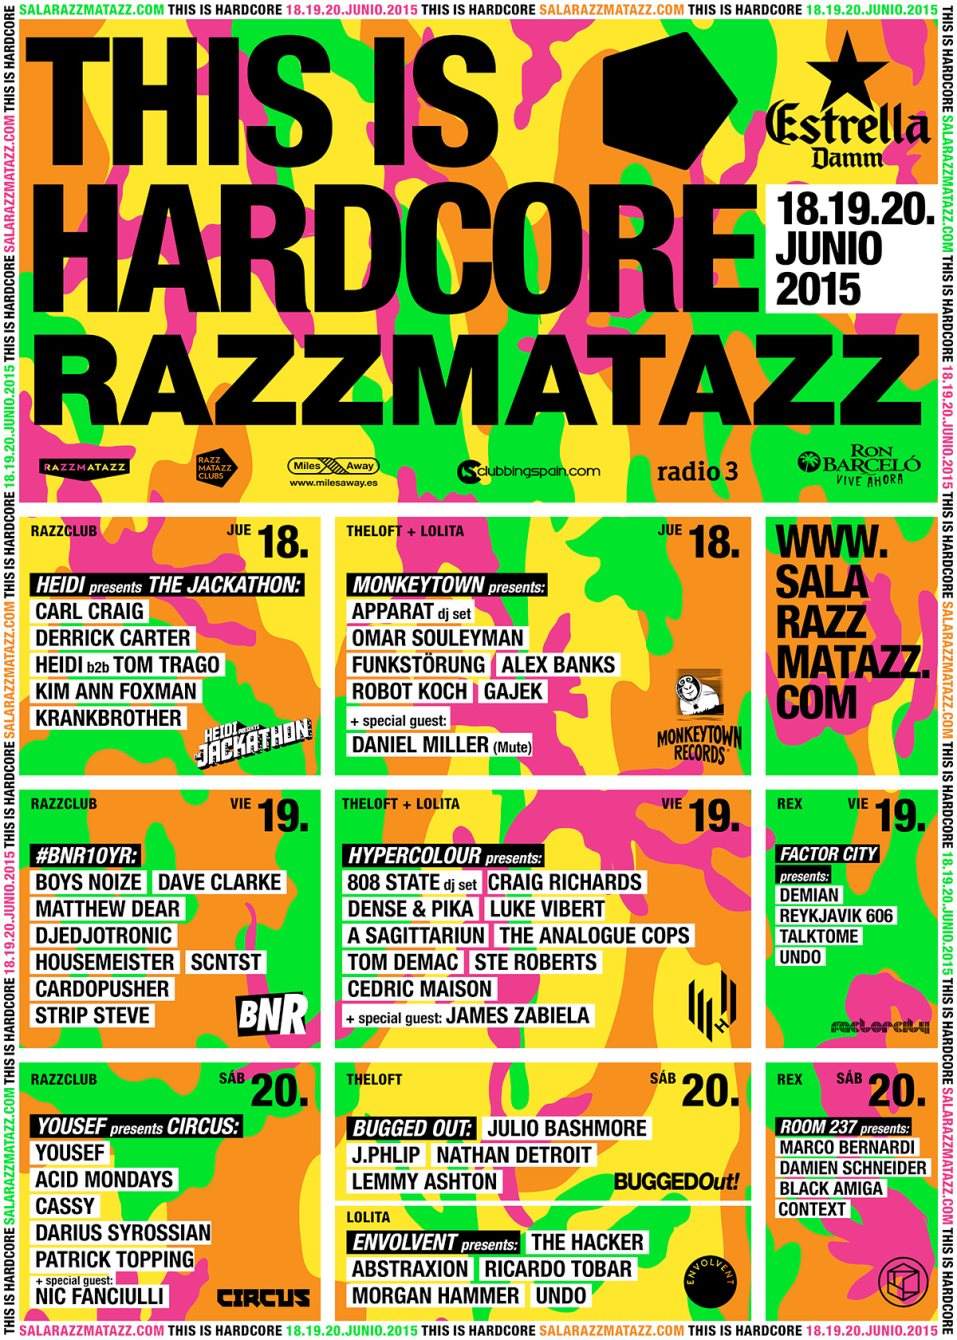 This Is Hardcore: Hypercolour: 808 State, Dense & Pika, Craig Richards - Página trasera